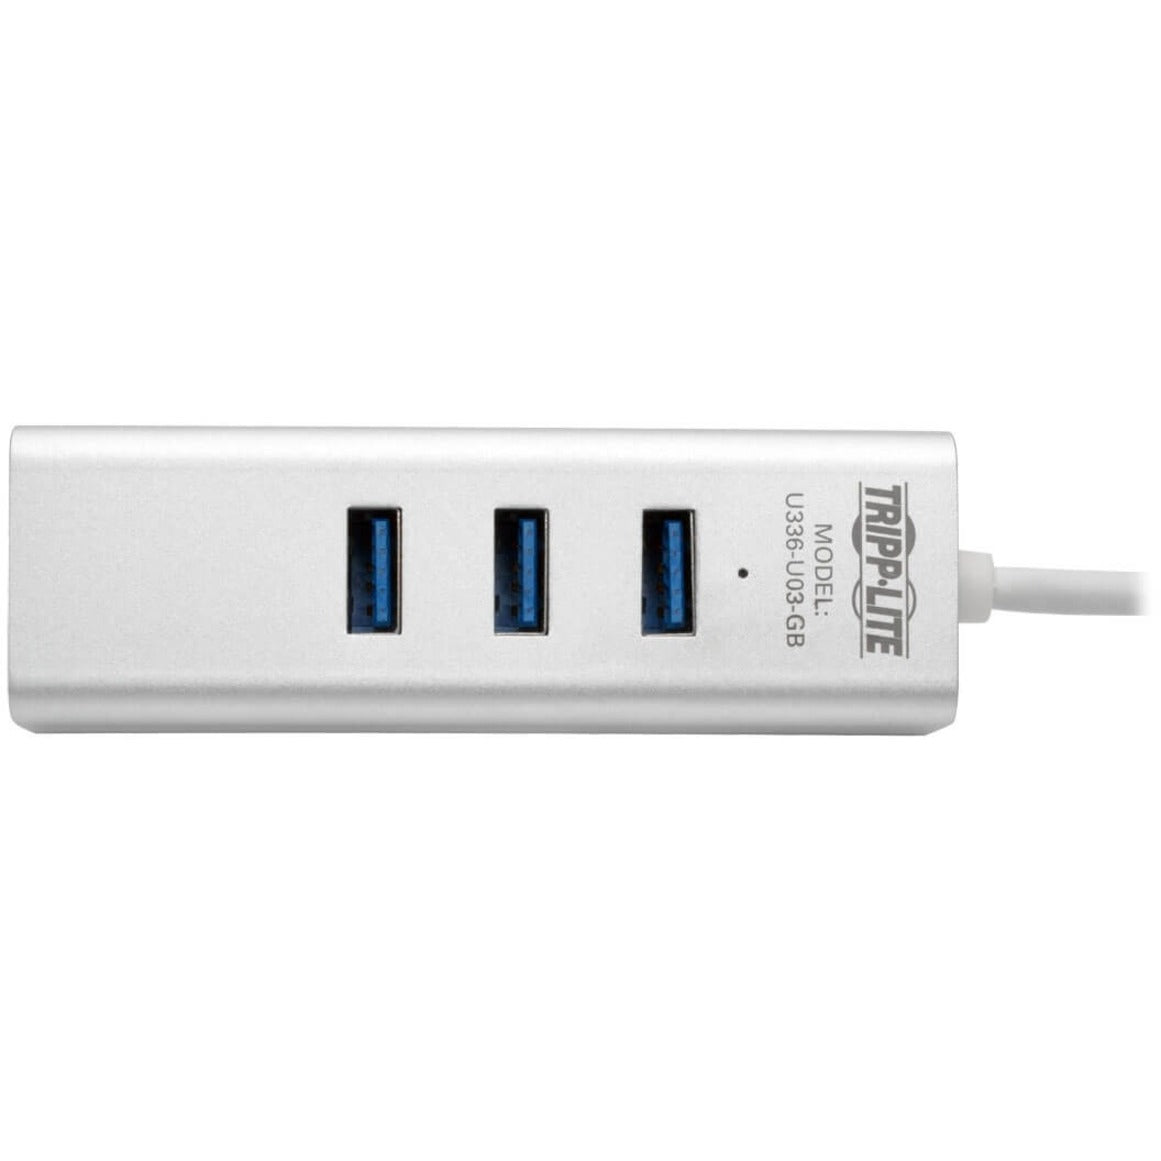 Tripp Lite U336-U03-GB USB 3.0SUPERSPEED GIG ETH NIC ADAPTER3PT USB 3.0HU, Gigabit Ethernet Card